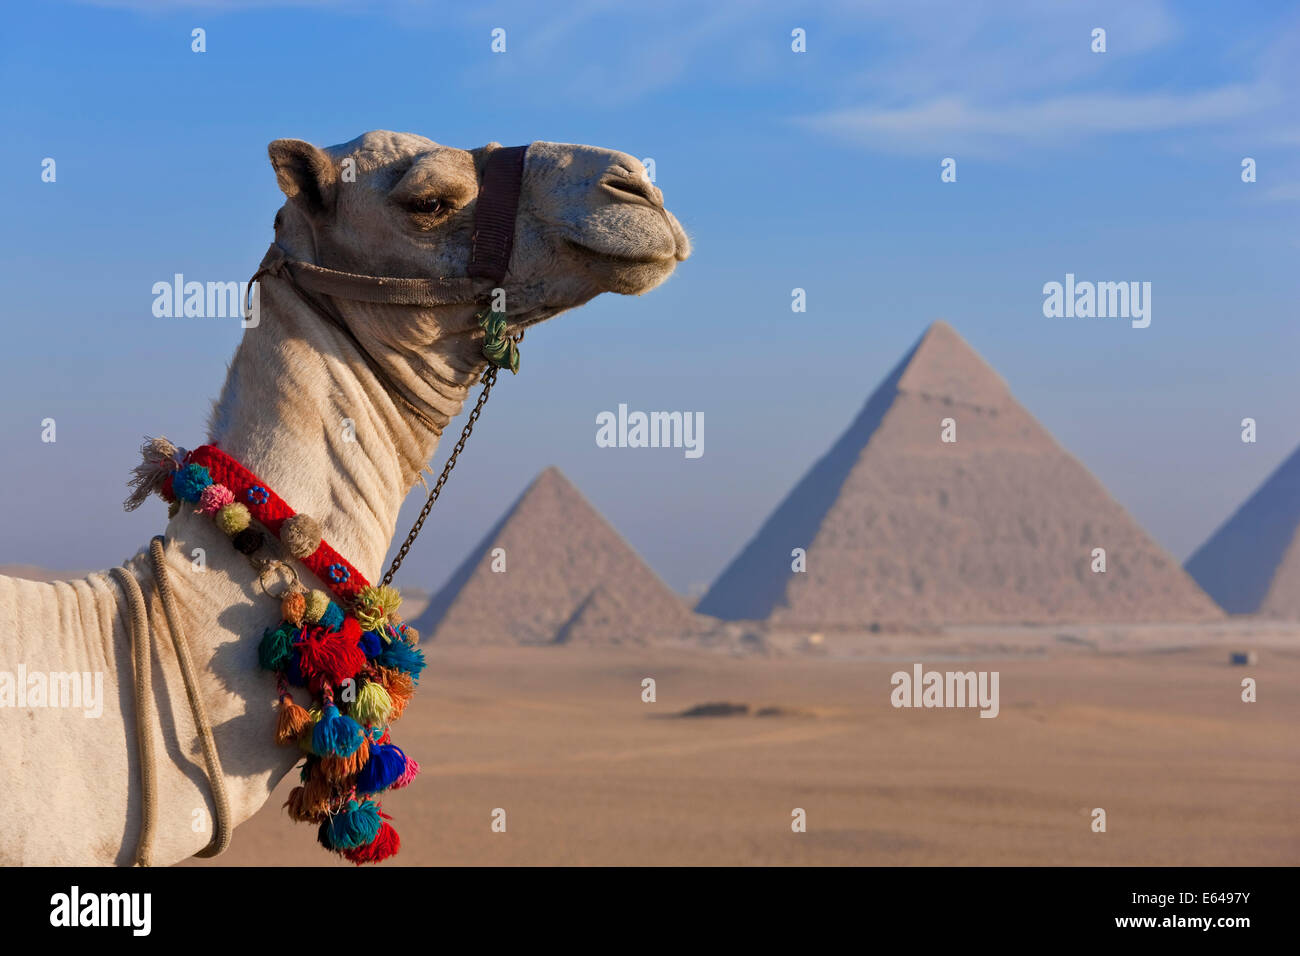 Camels & Pyramids, Giza, Egypt Stock Photo